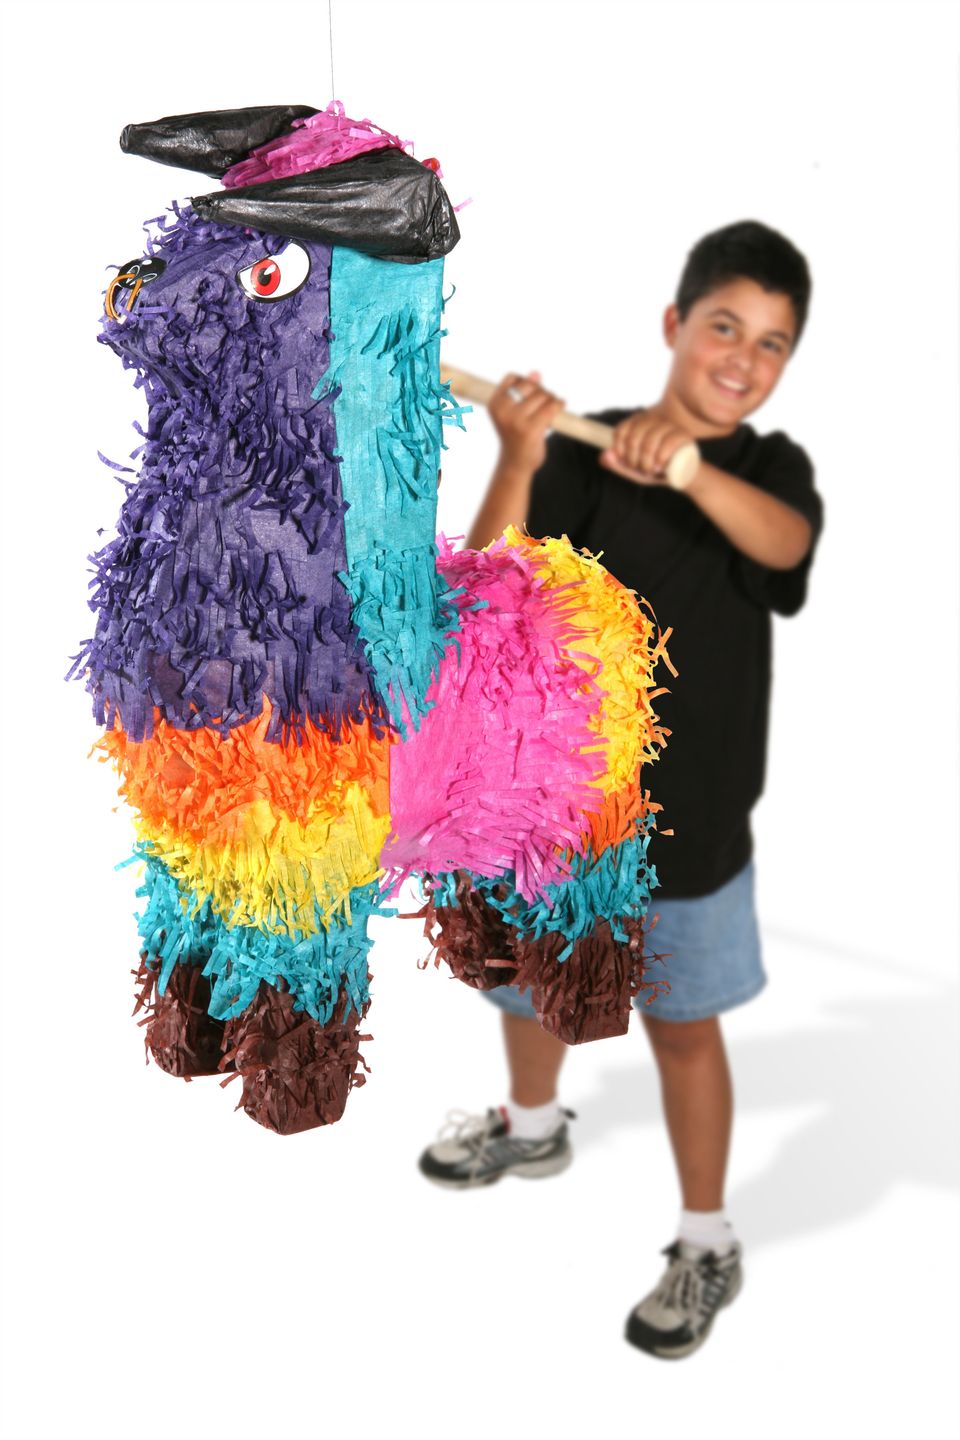 This Piñata